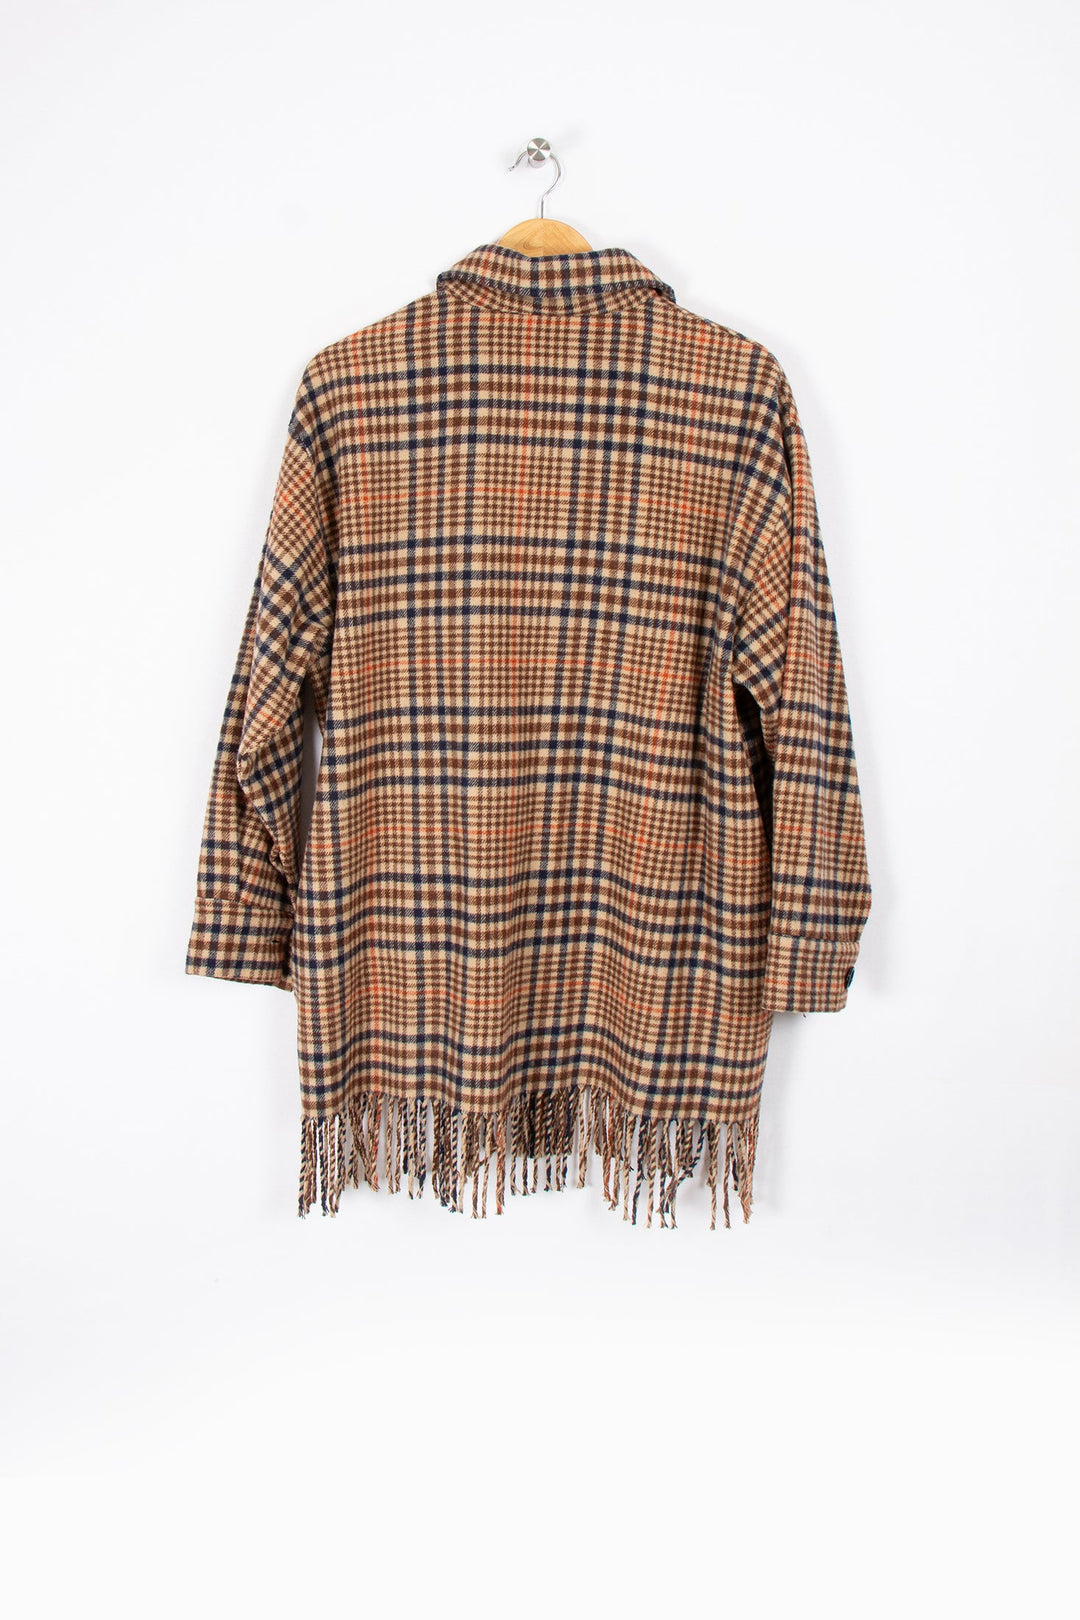 Checked wool blend shirt jacket - XL/42